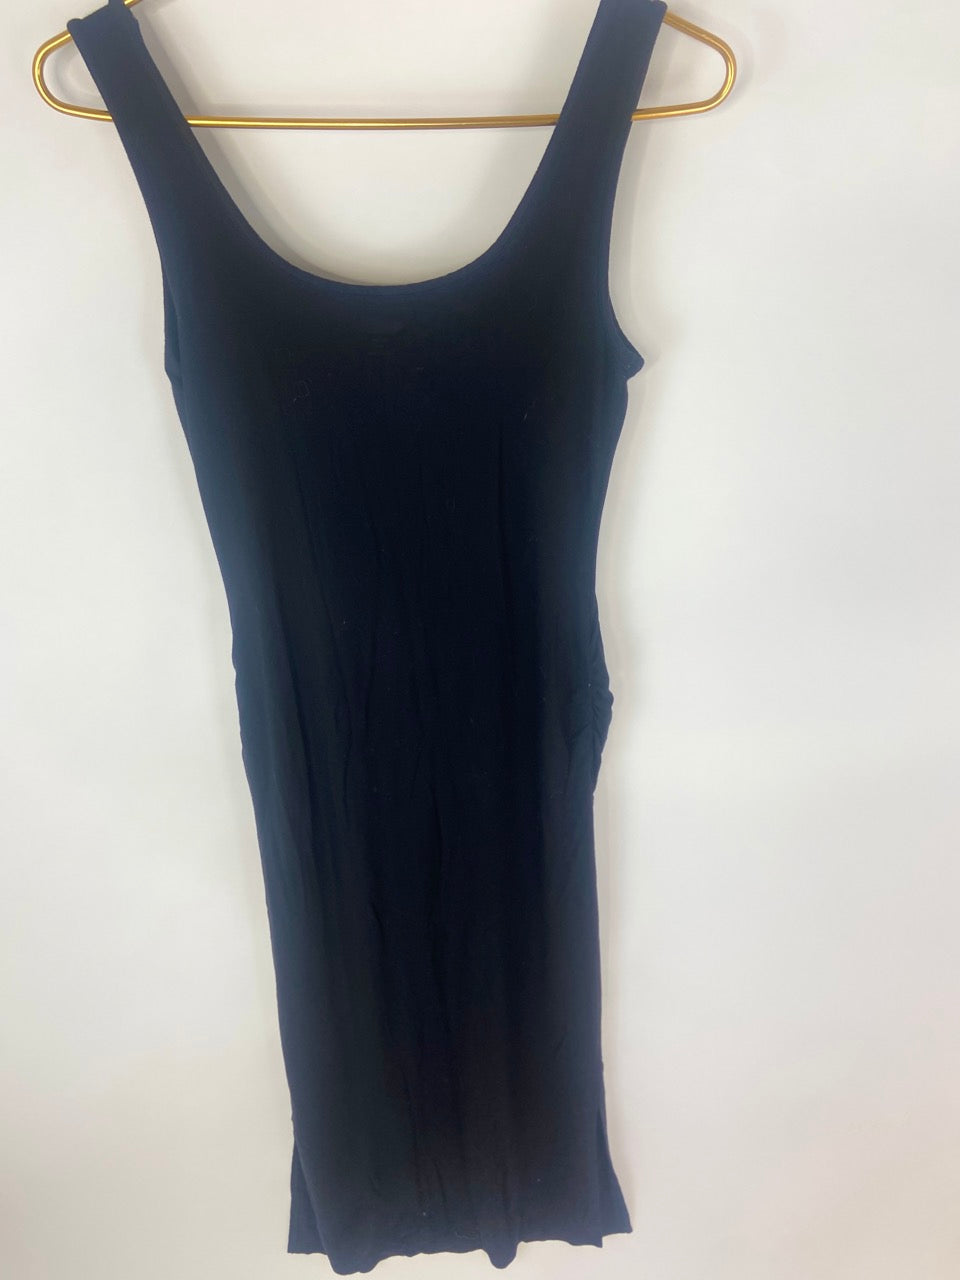 Long Black Maternity Dress with Slit- XS